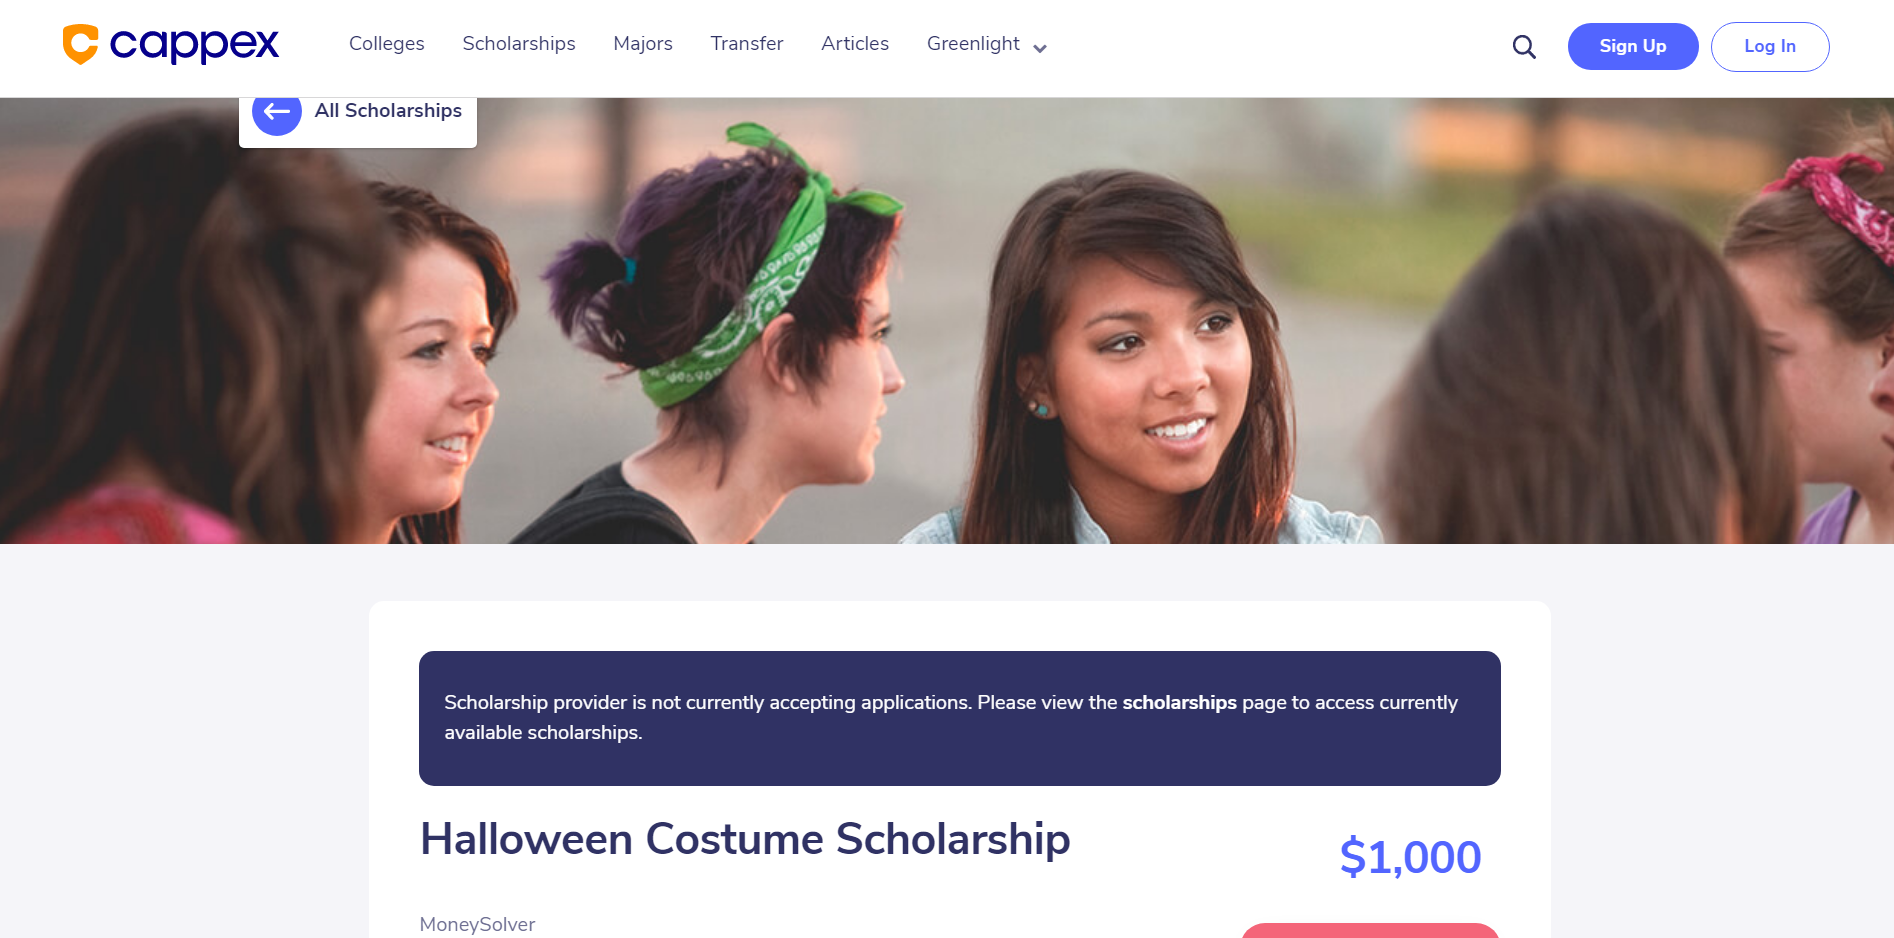 Halloween costume scholarship